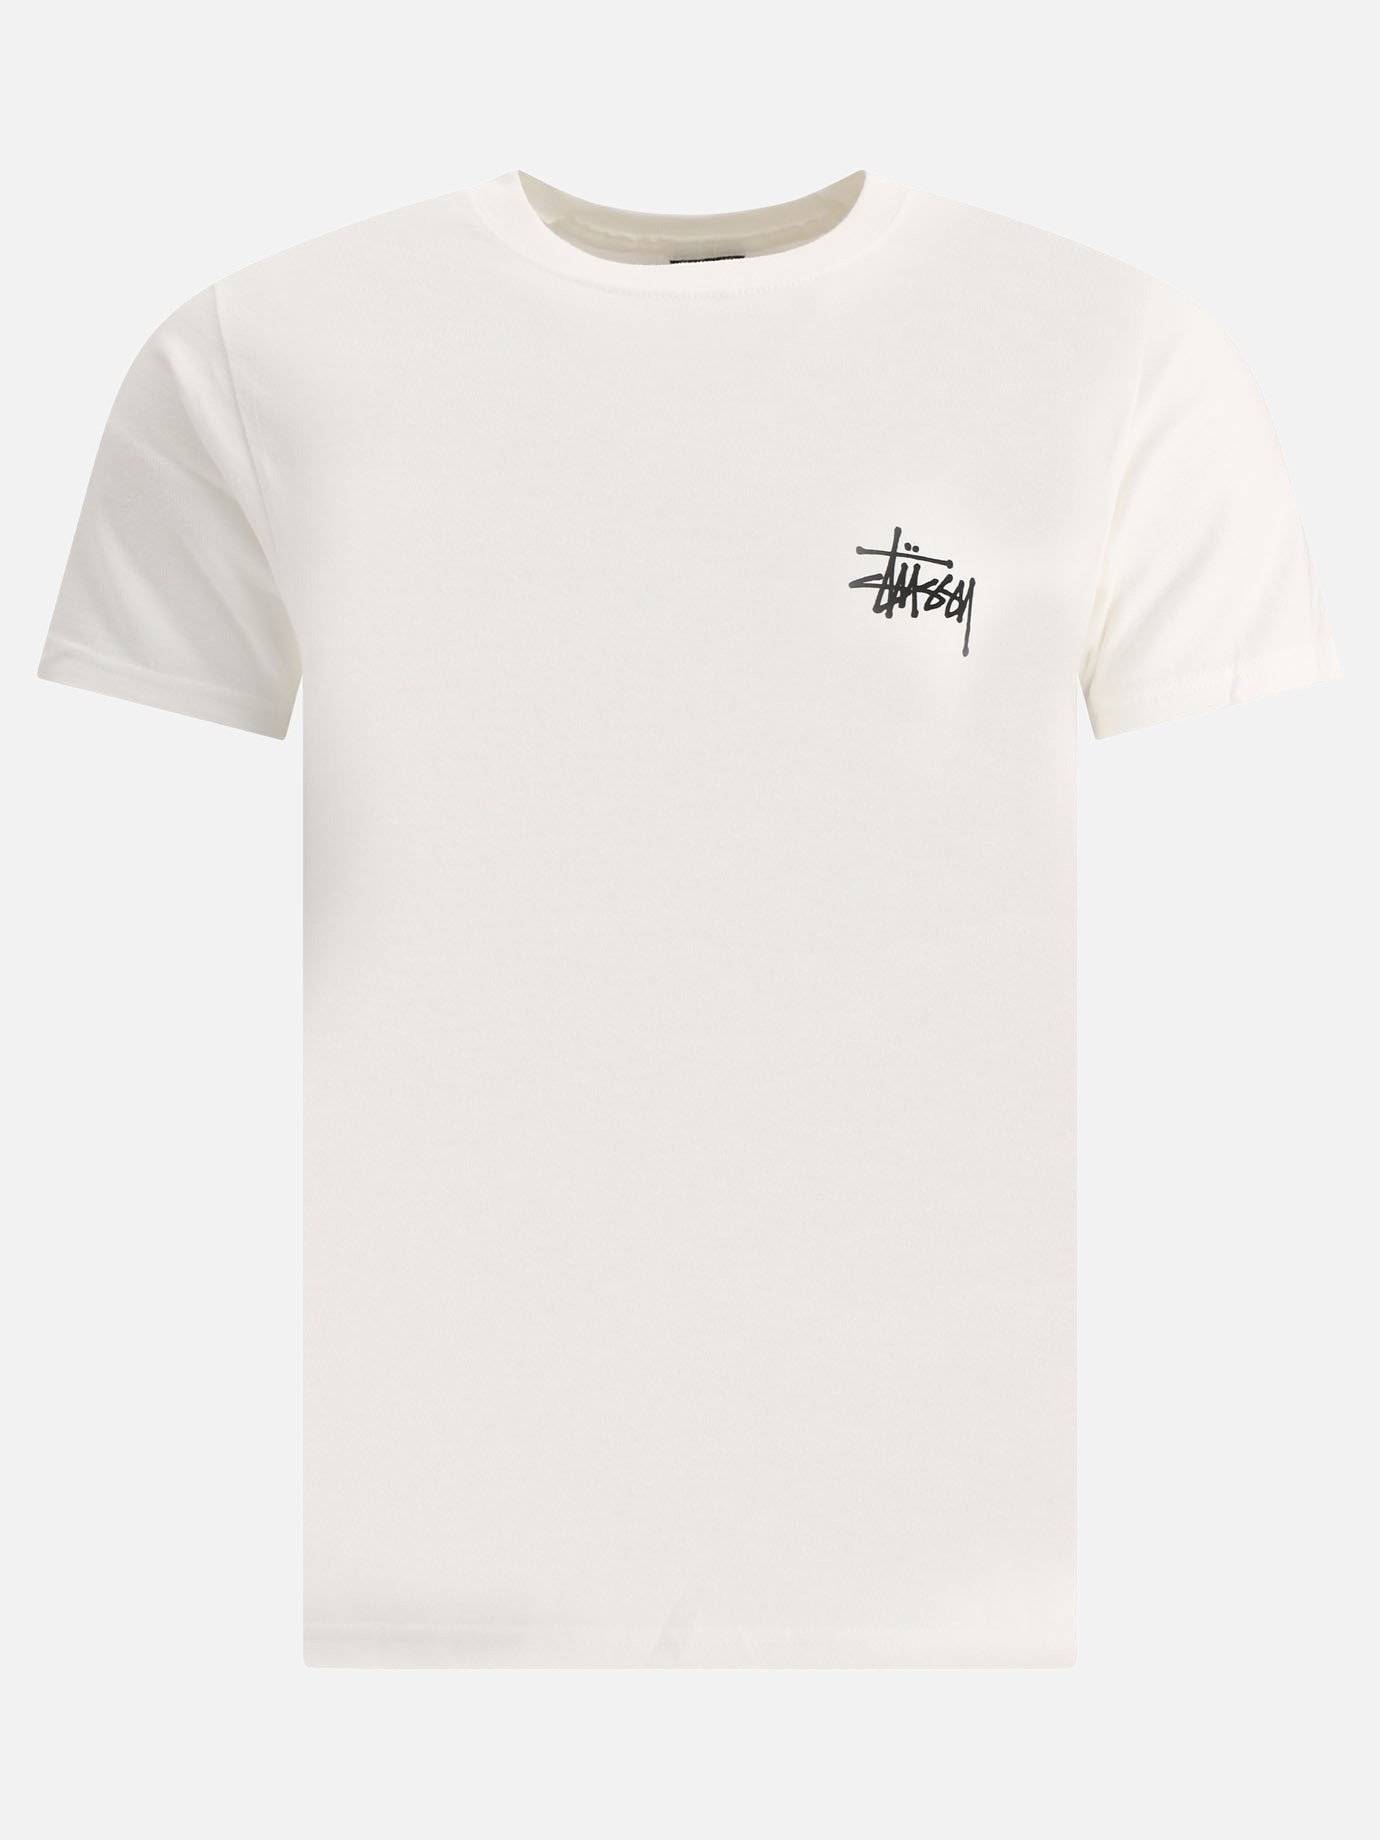  Basic  t-shirtby Stüssy - 1